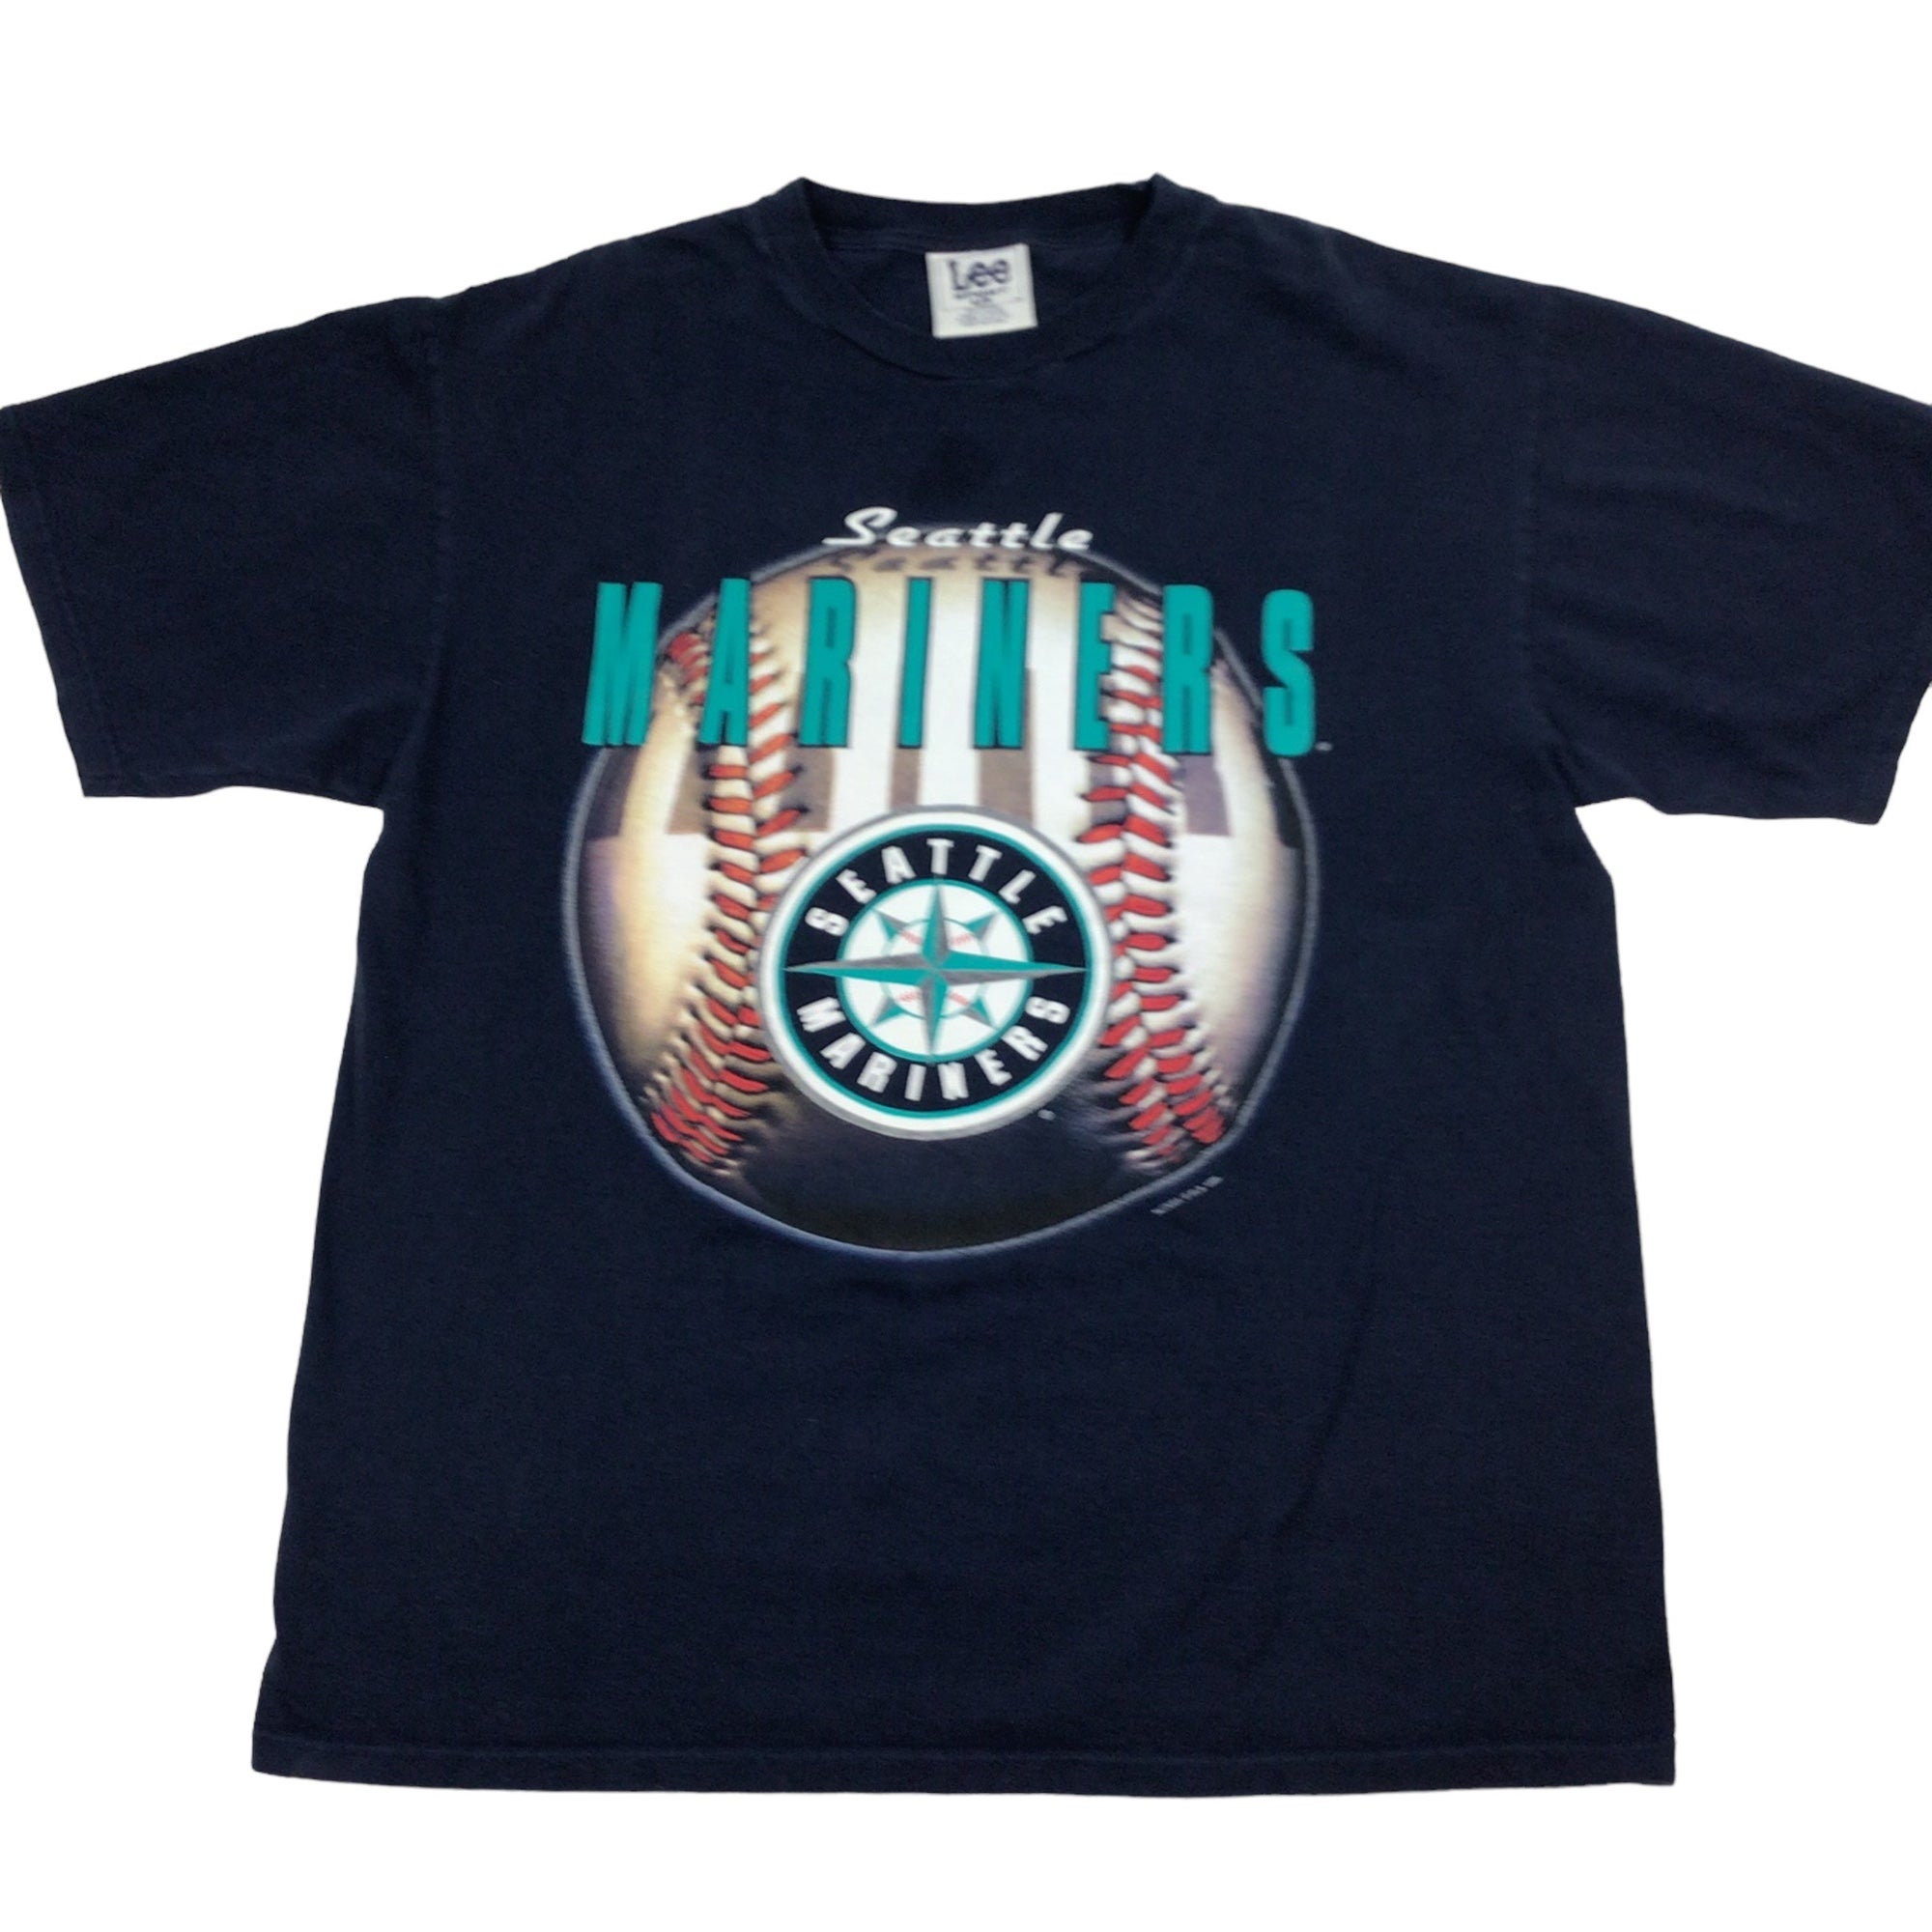 Vintage 1987 Seattle Mariners MLB Raglan Style T-shirt. Made 